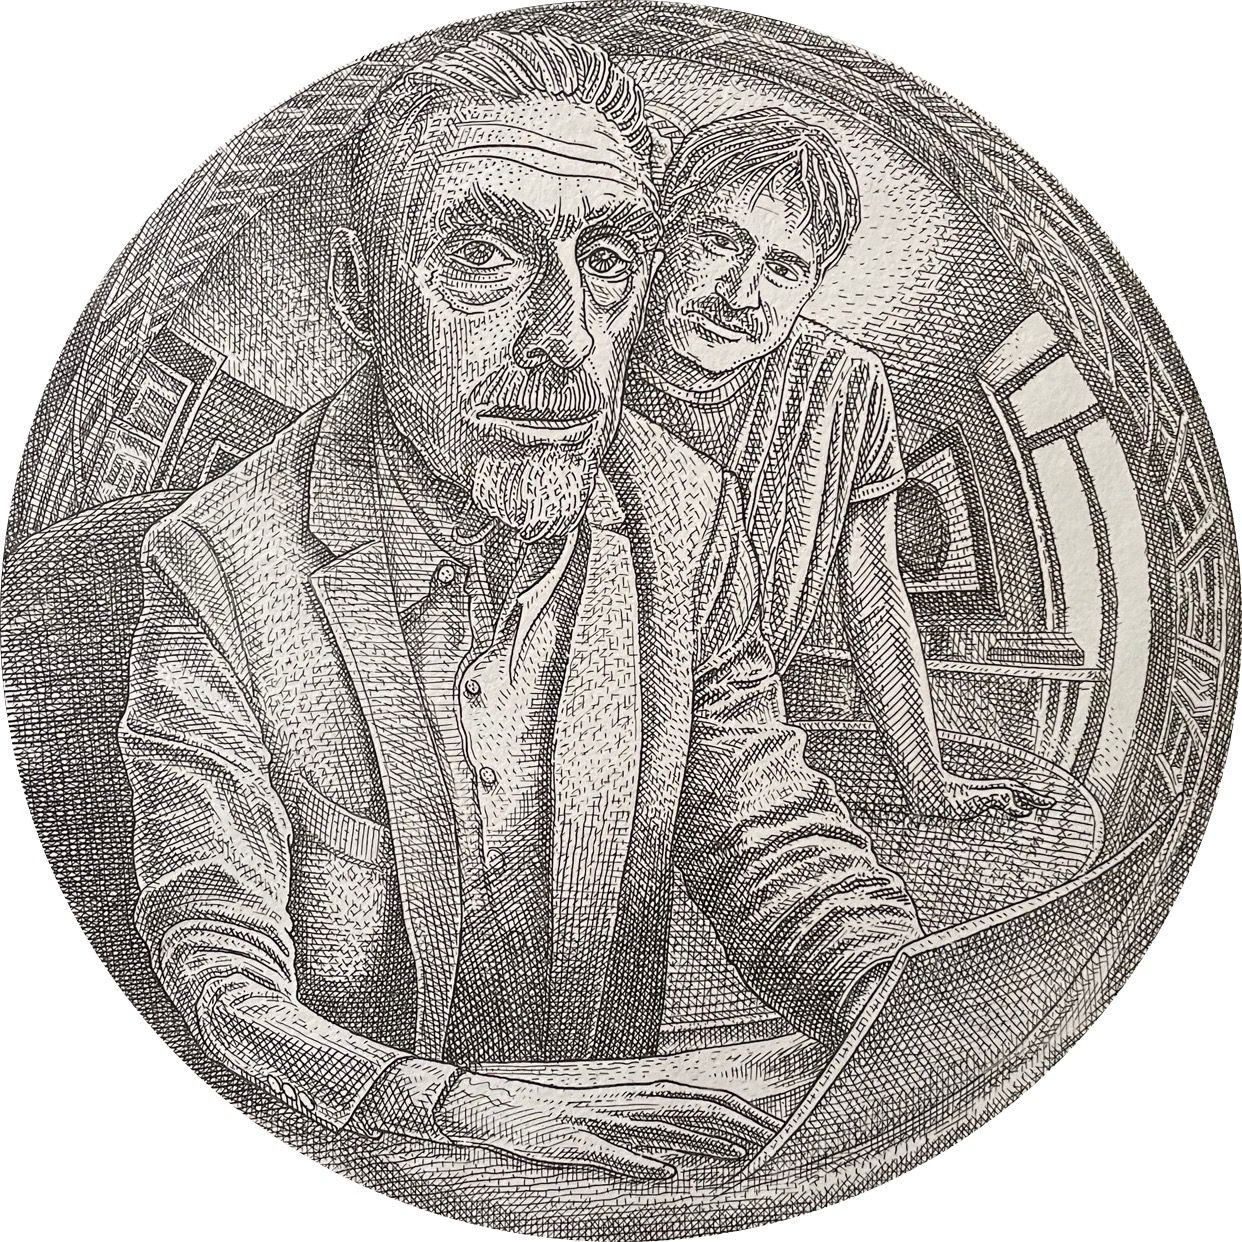 Orosz, István: Selfportrait with M.C. Escher